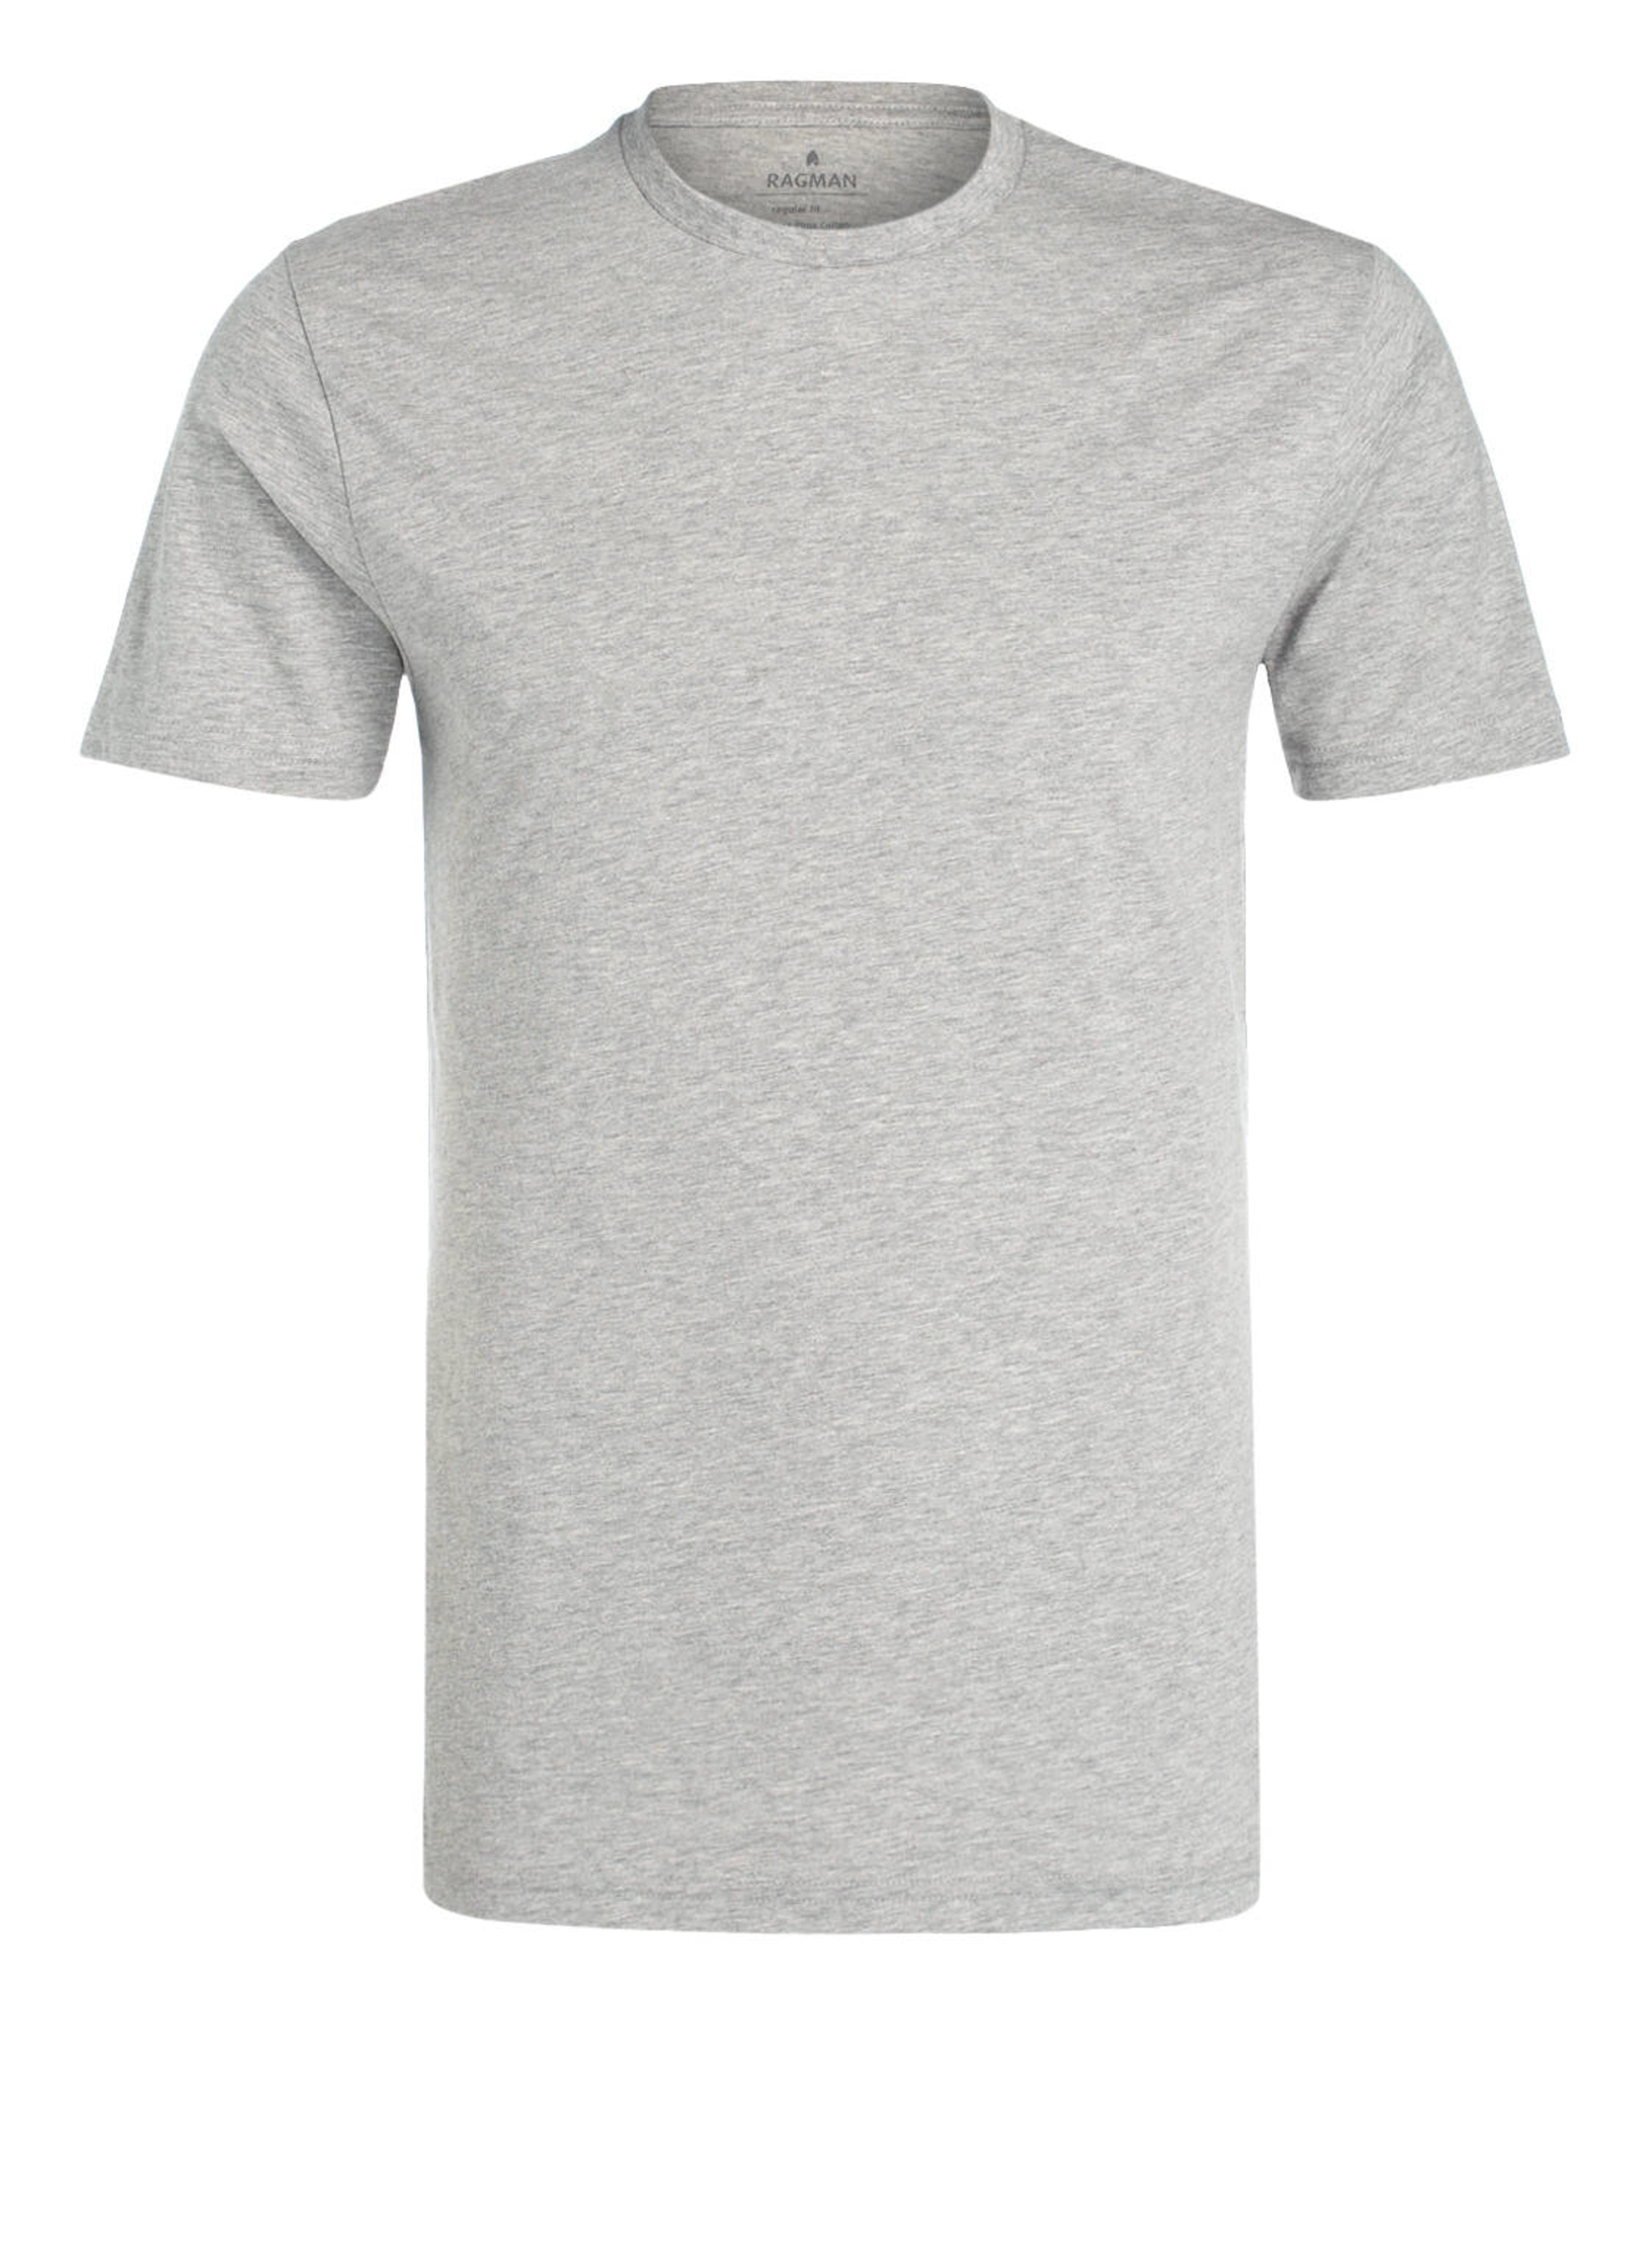 T-shirt gray regular in mélange RAGMAN fit